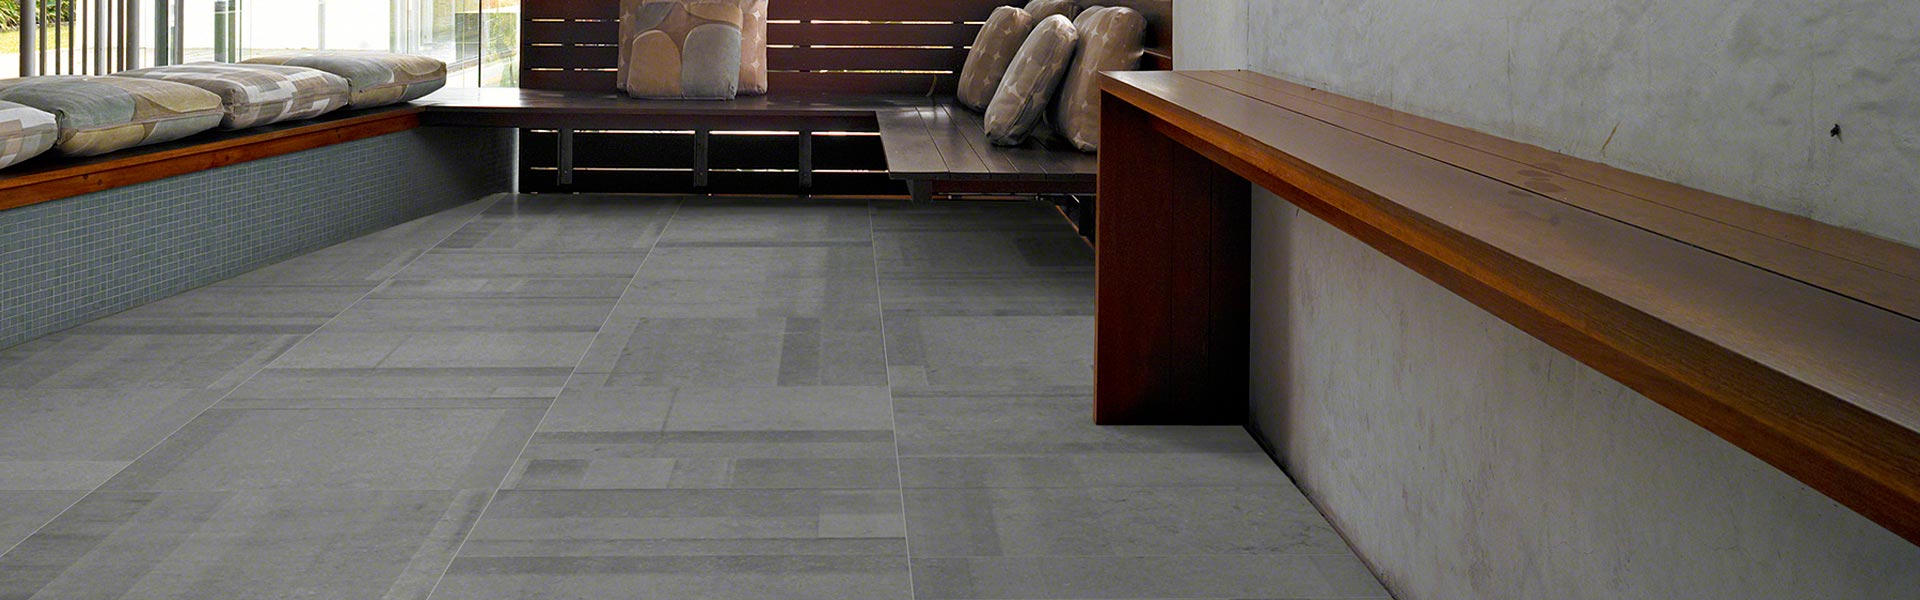 Floor tiles porcelain stone effect tiles Bluestone 60X60 | VIVES